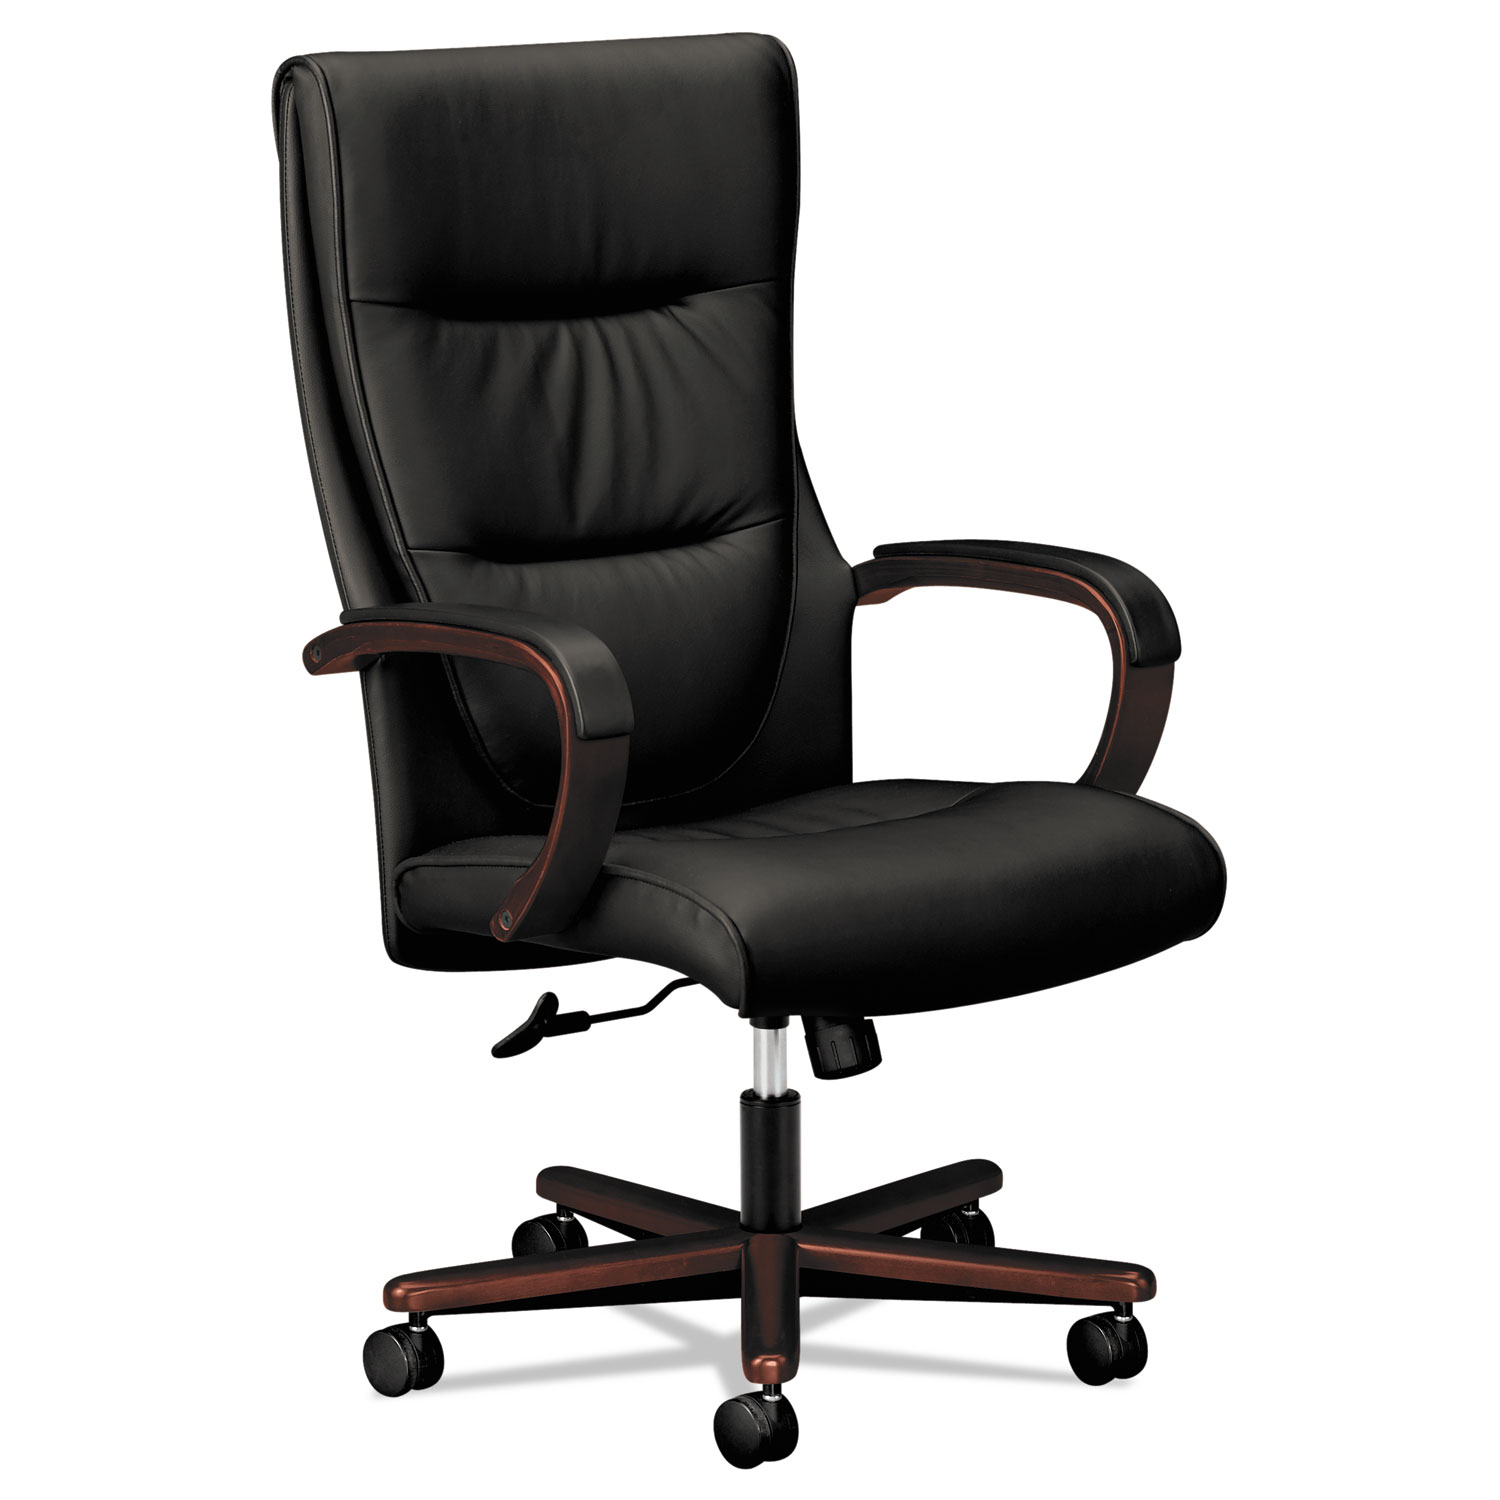  HON HVL844.N.SB11 VL844 Leather High-Back Chair, Supports up to 250 lbs., Black Seat/Mahogany Back, Mahogany Base (BSXVL844NSB11) 